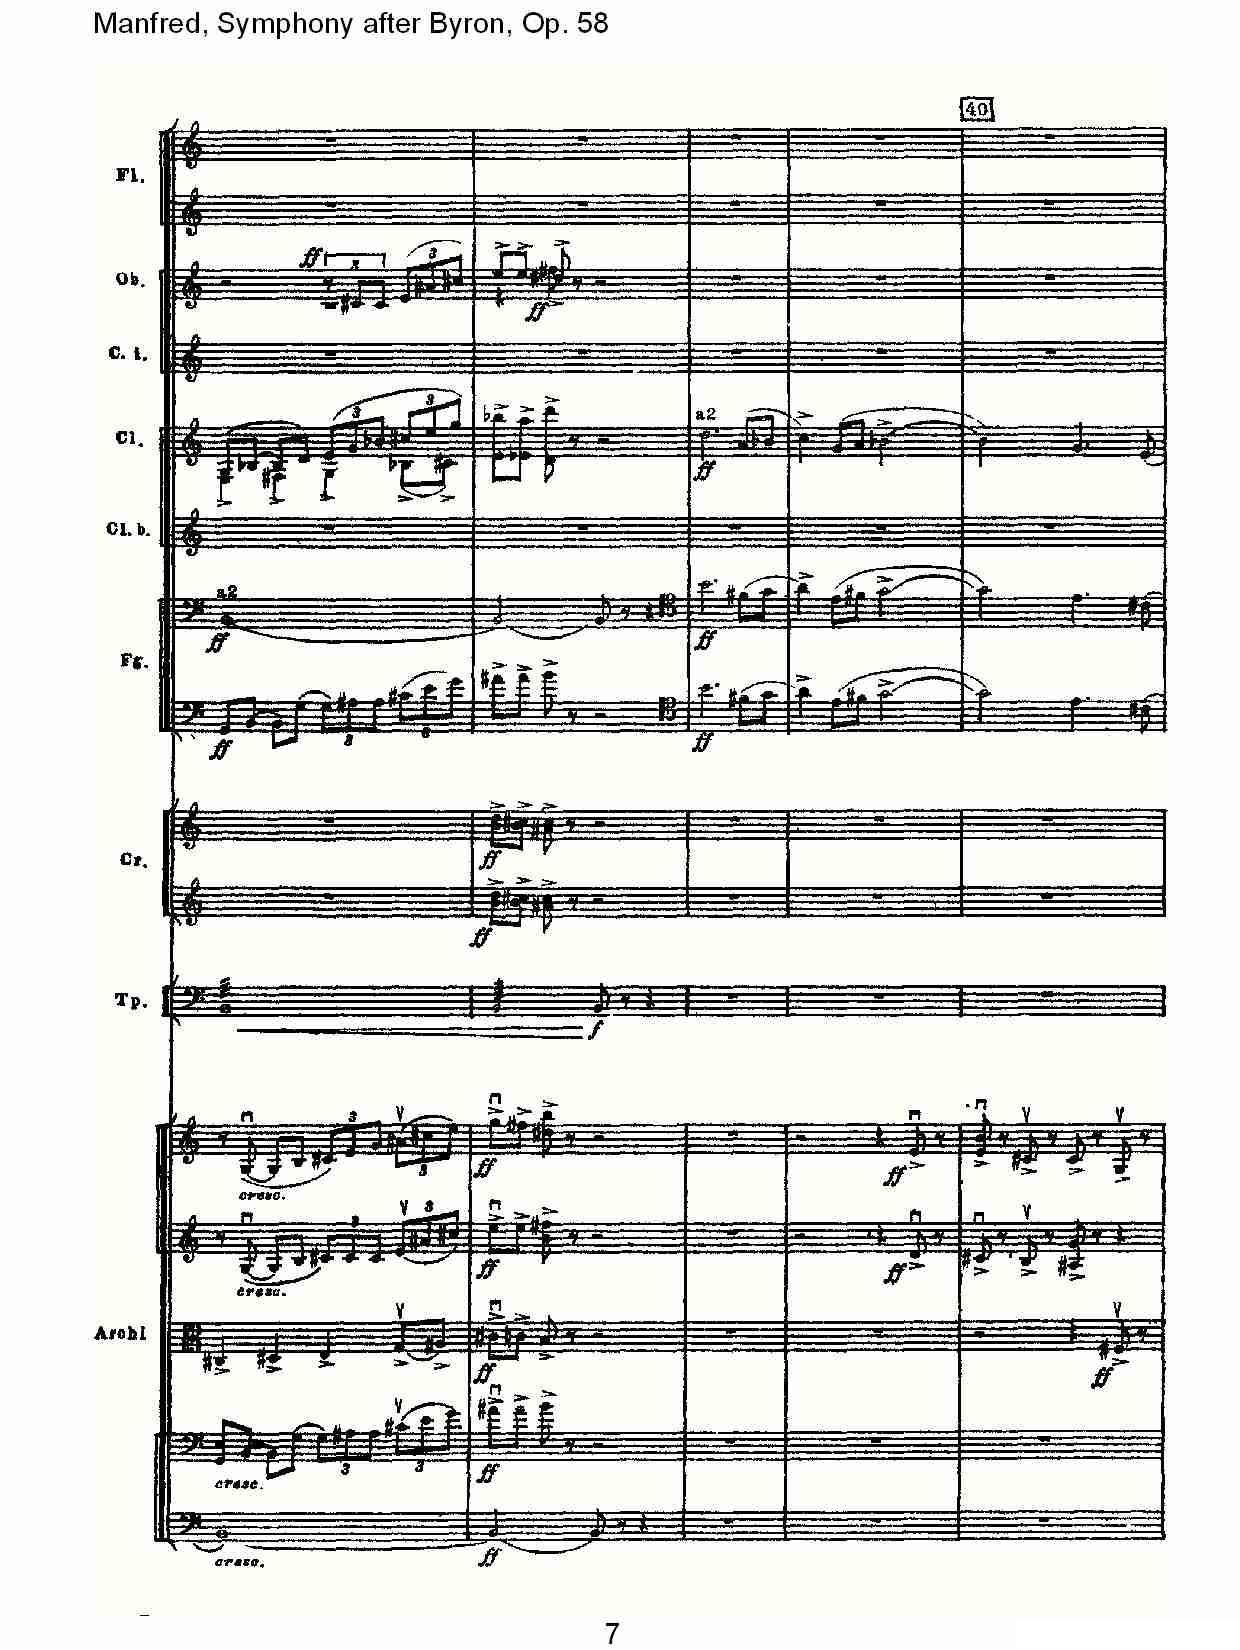 Manfred, Symphony after Byron, Op.58第一乐章（一）其它曲谱（图7）